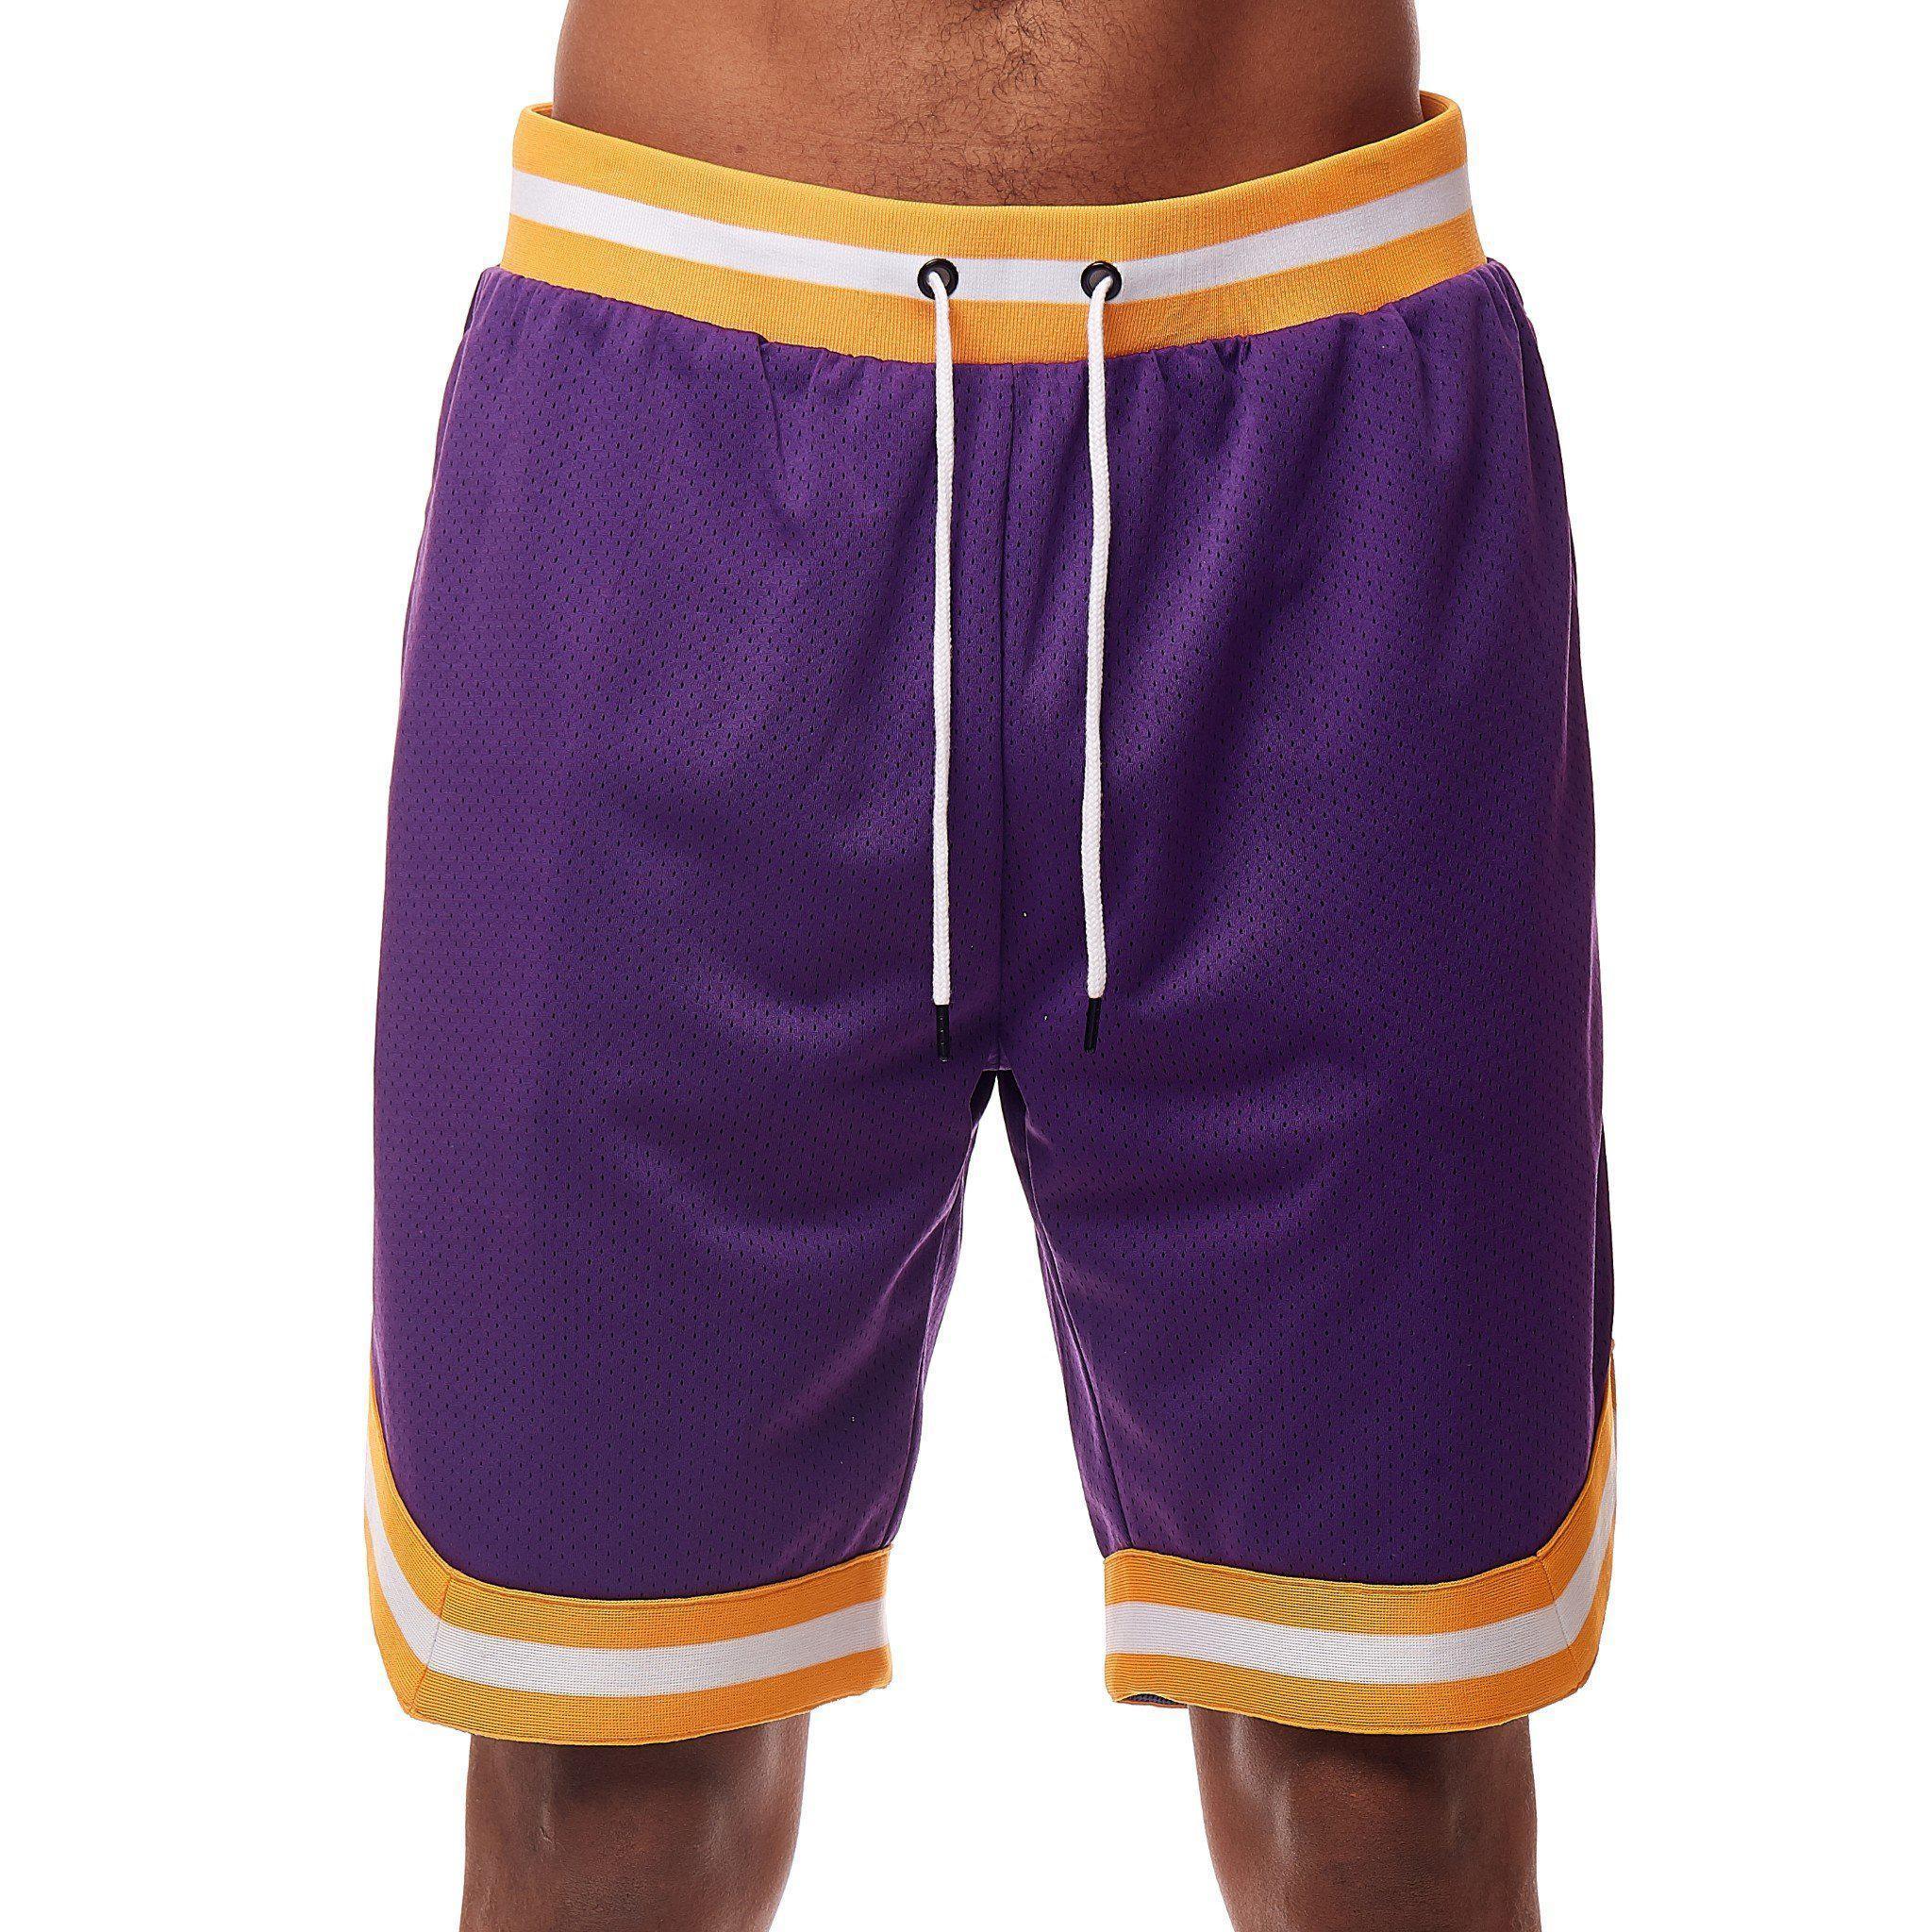 mesh shorts purple